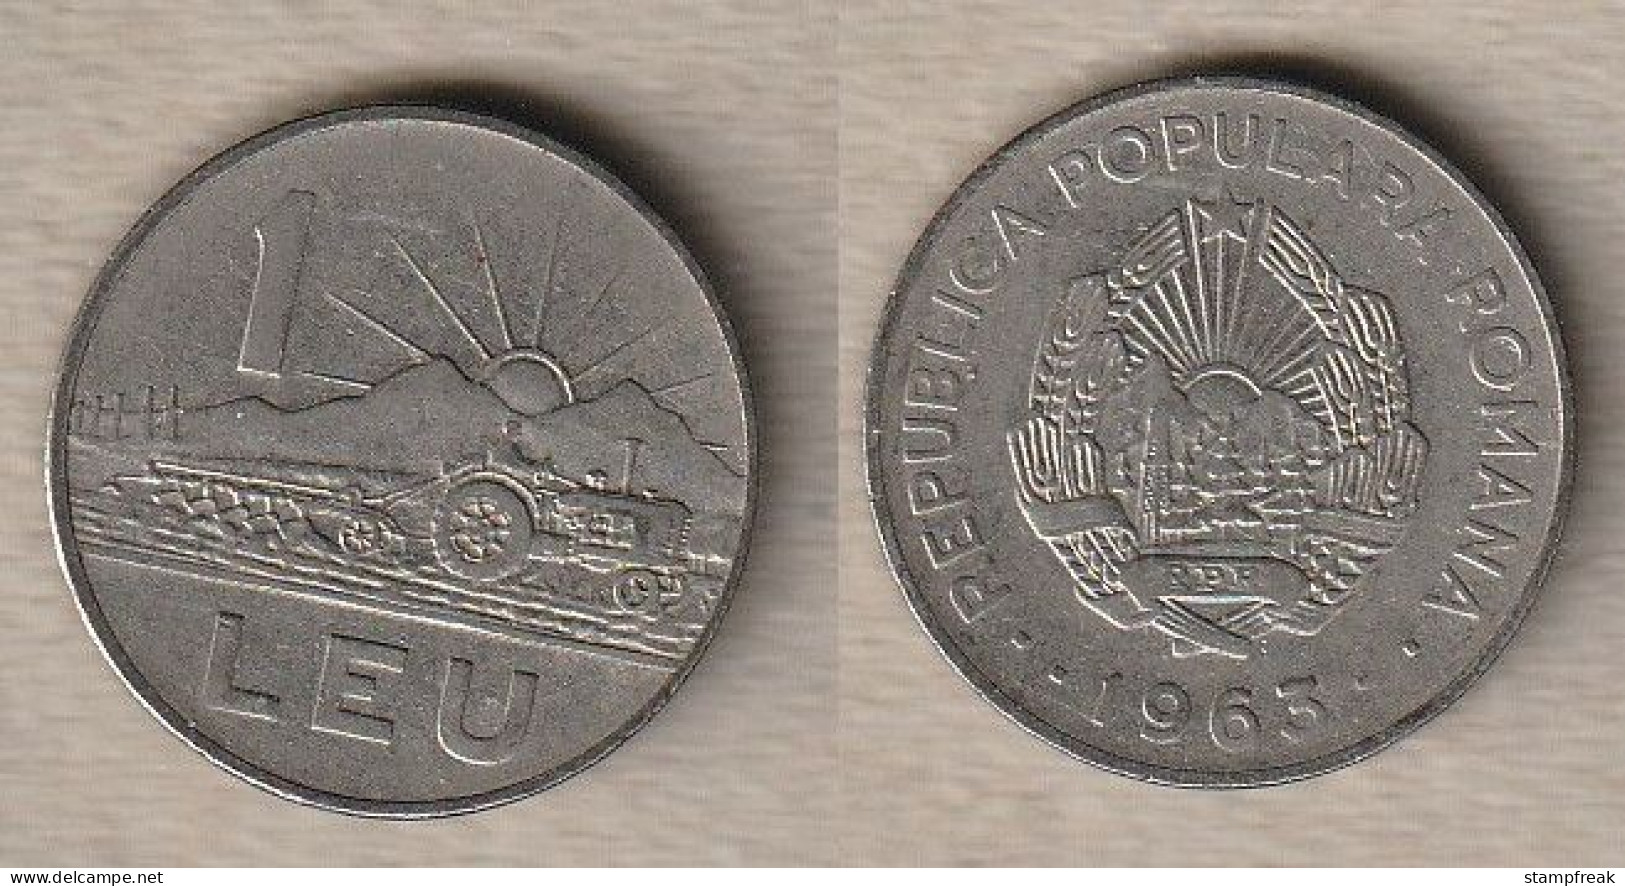 02457) Rumänien, 1 Leu 1963 - Romania